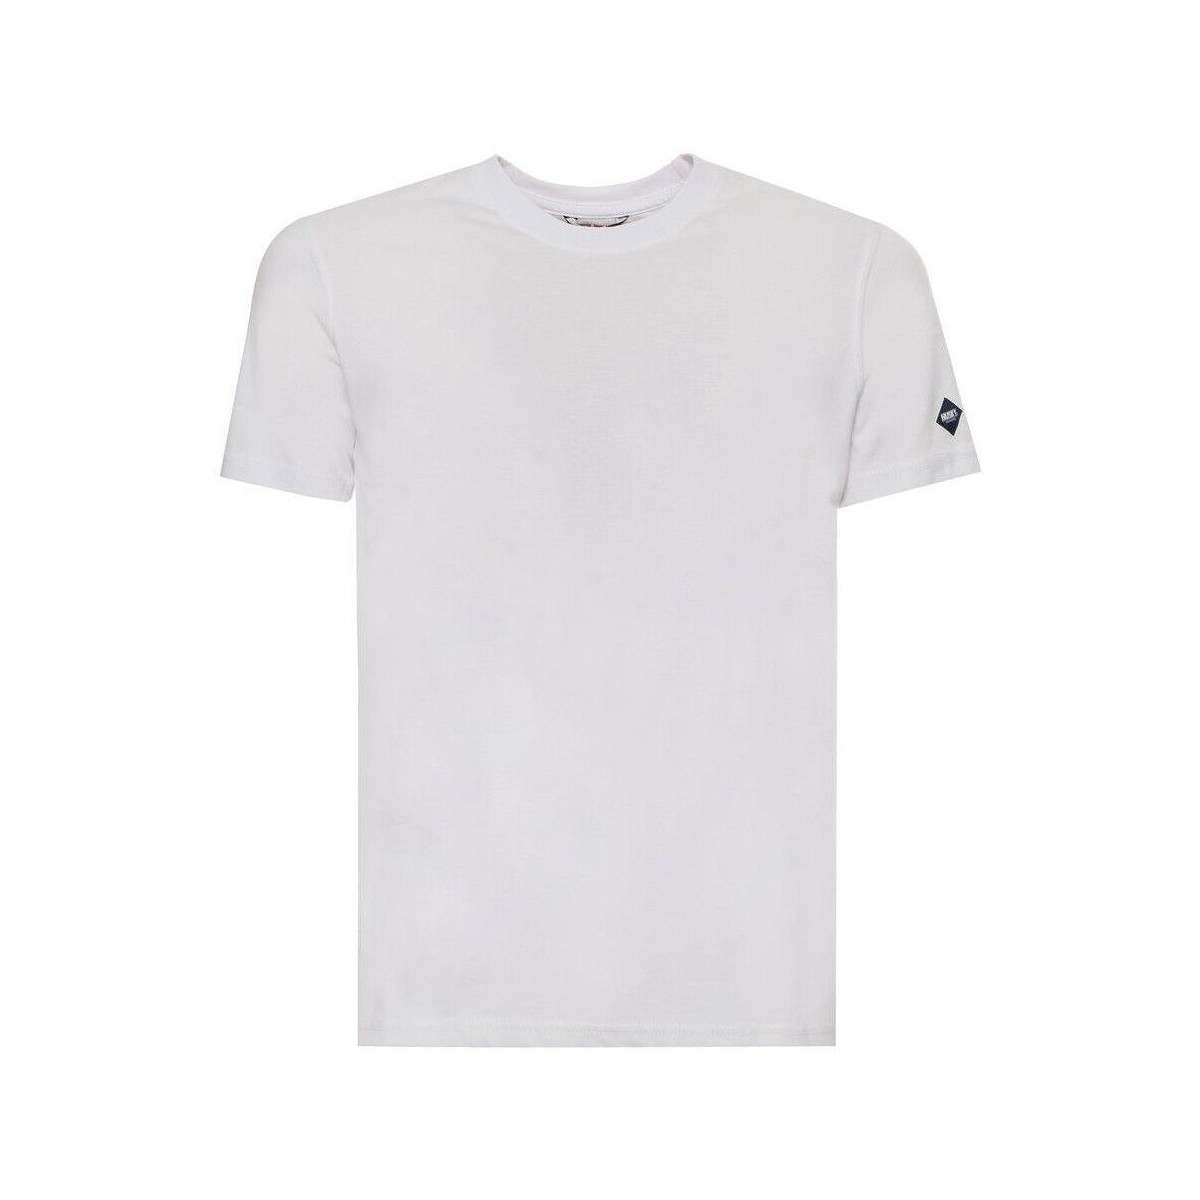 textil Hombre Camisetas manga corta Husky - hs23beutc35co186-vincent Blanco